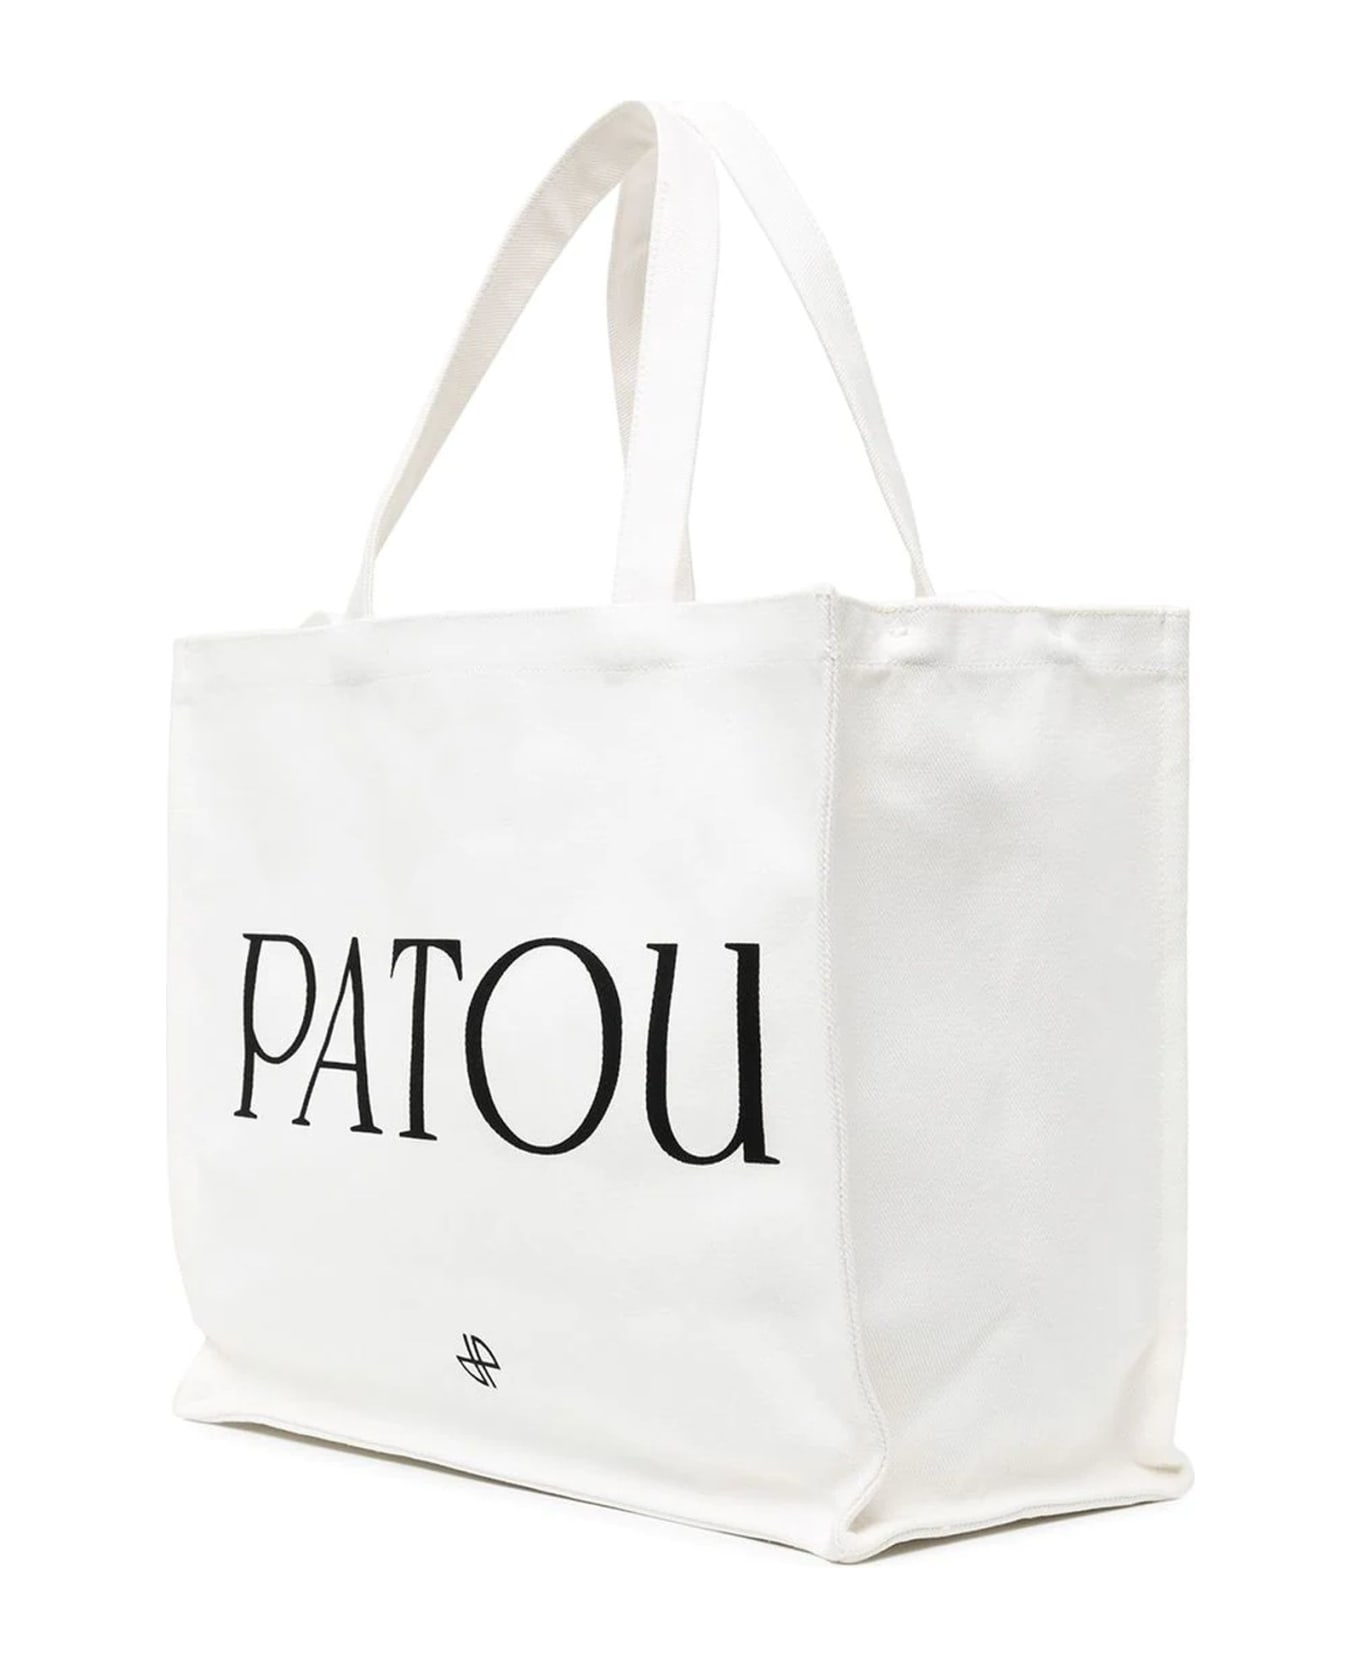 Patou White Cotton Tote Bag - White トートバッグ